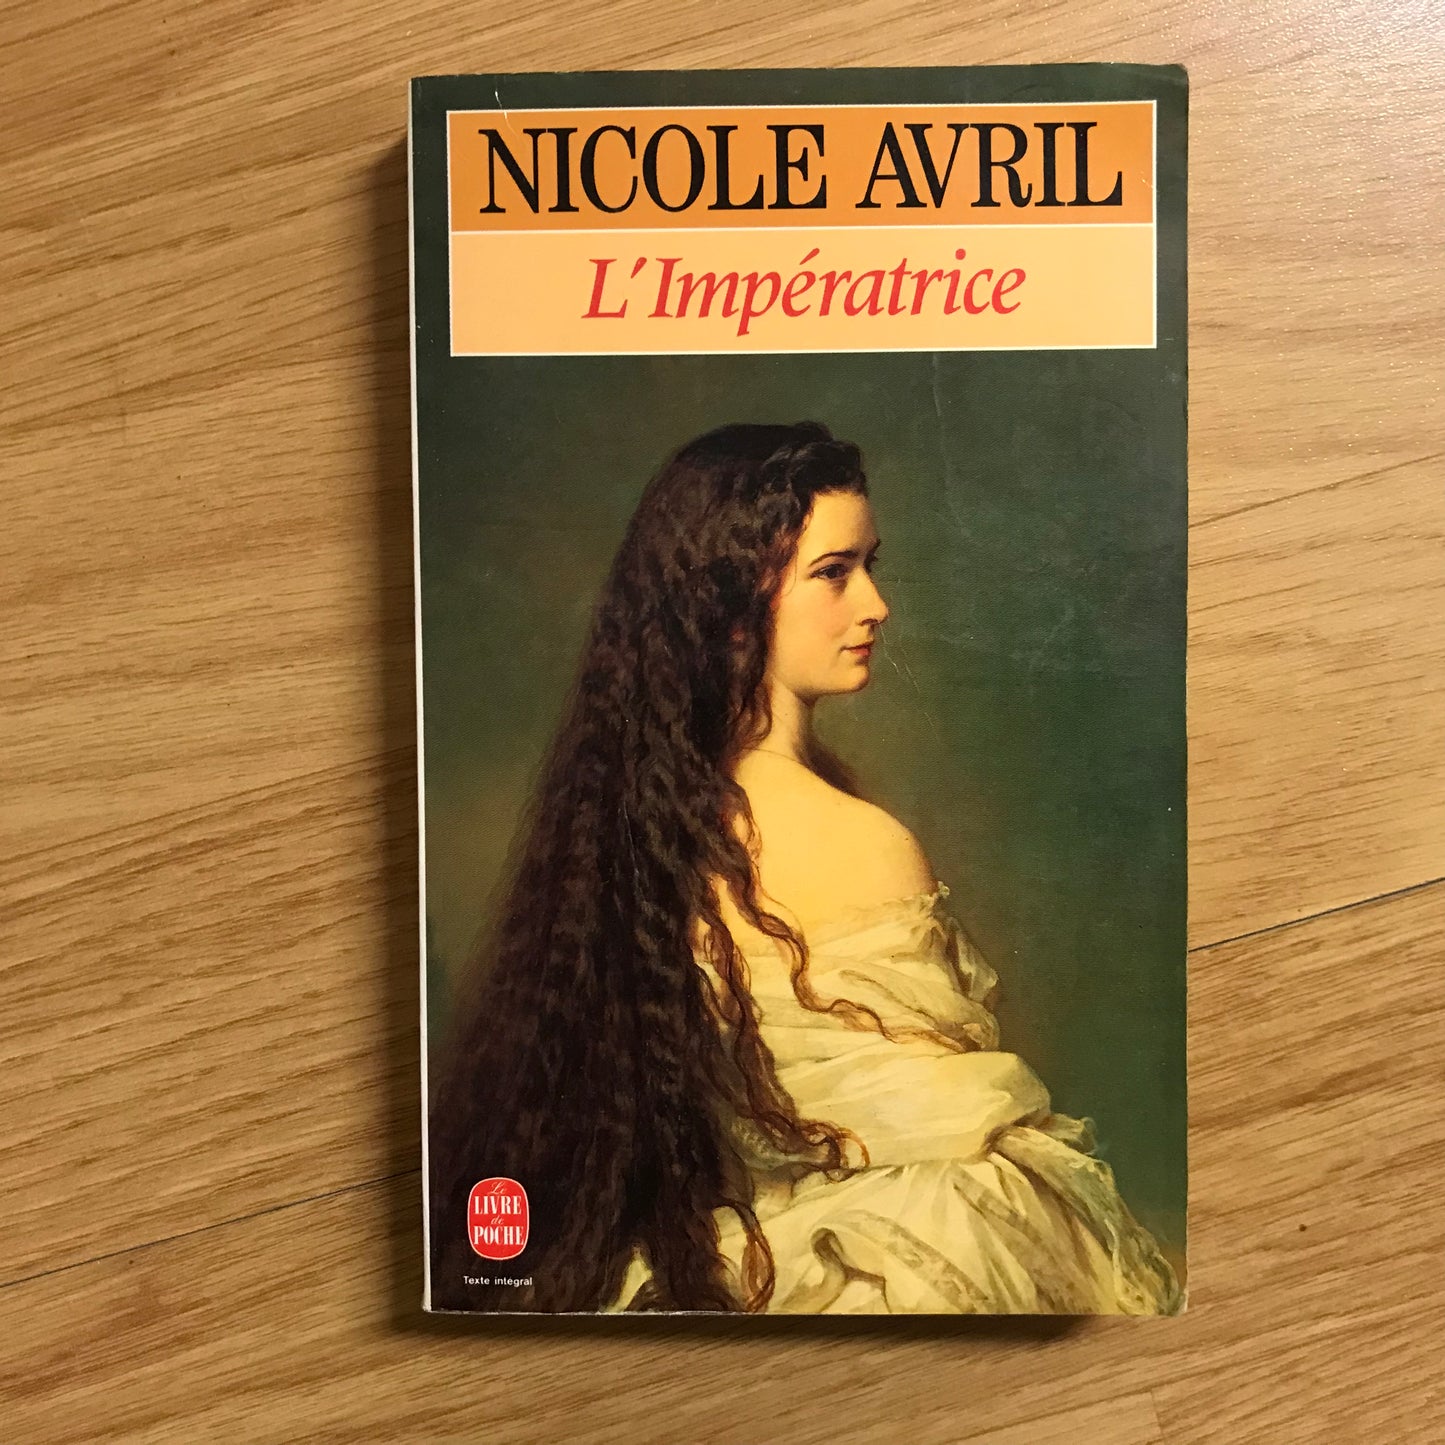 Avril, Nicole - L’Impératrice